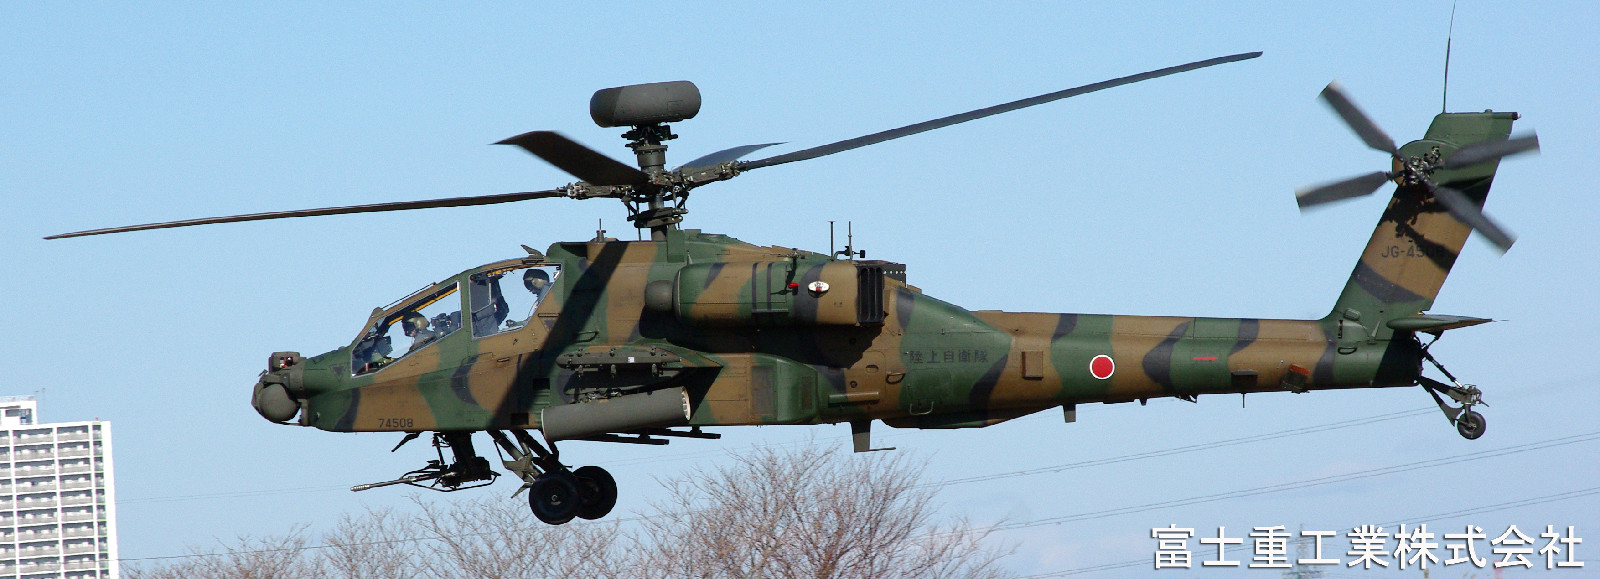 陸自富士AH-64D